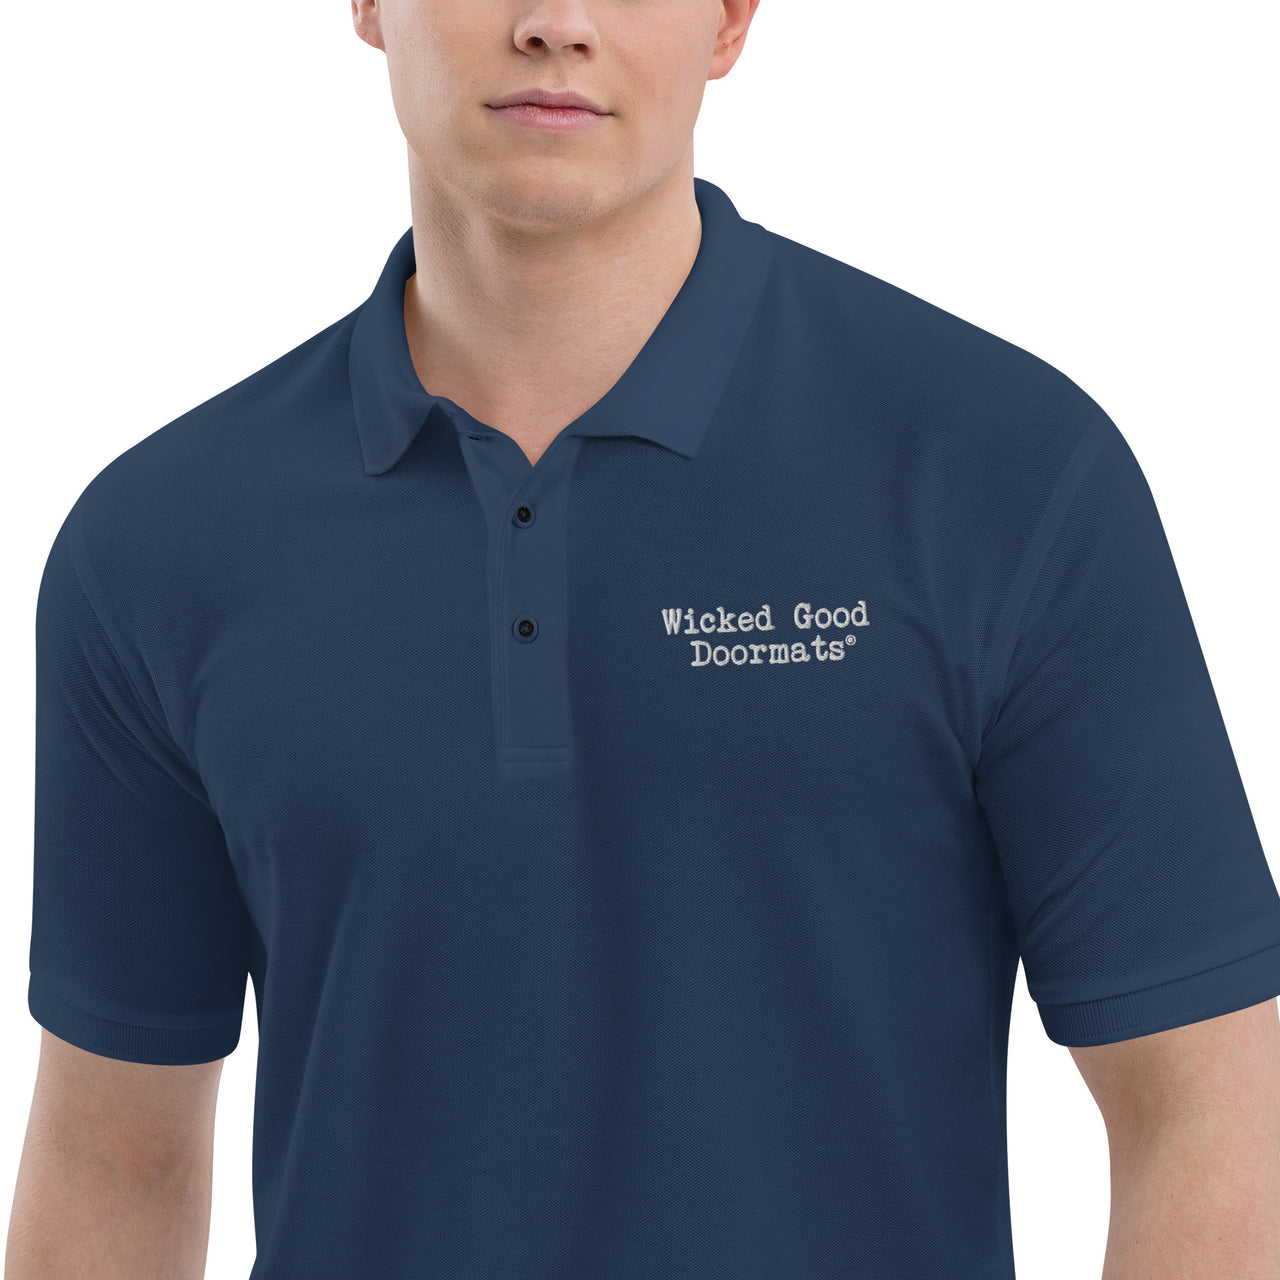 Men's Premium Polo Shirts & Tops New England Trading Co Navy S 